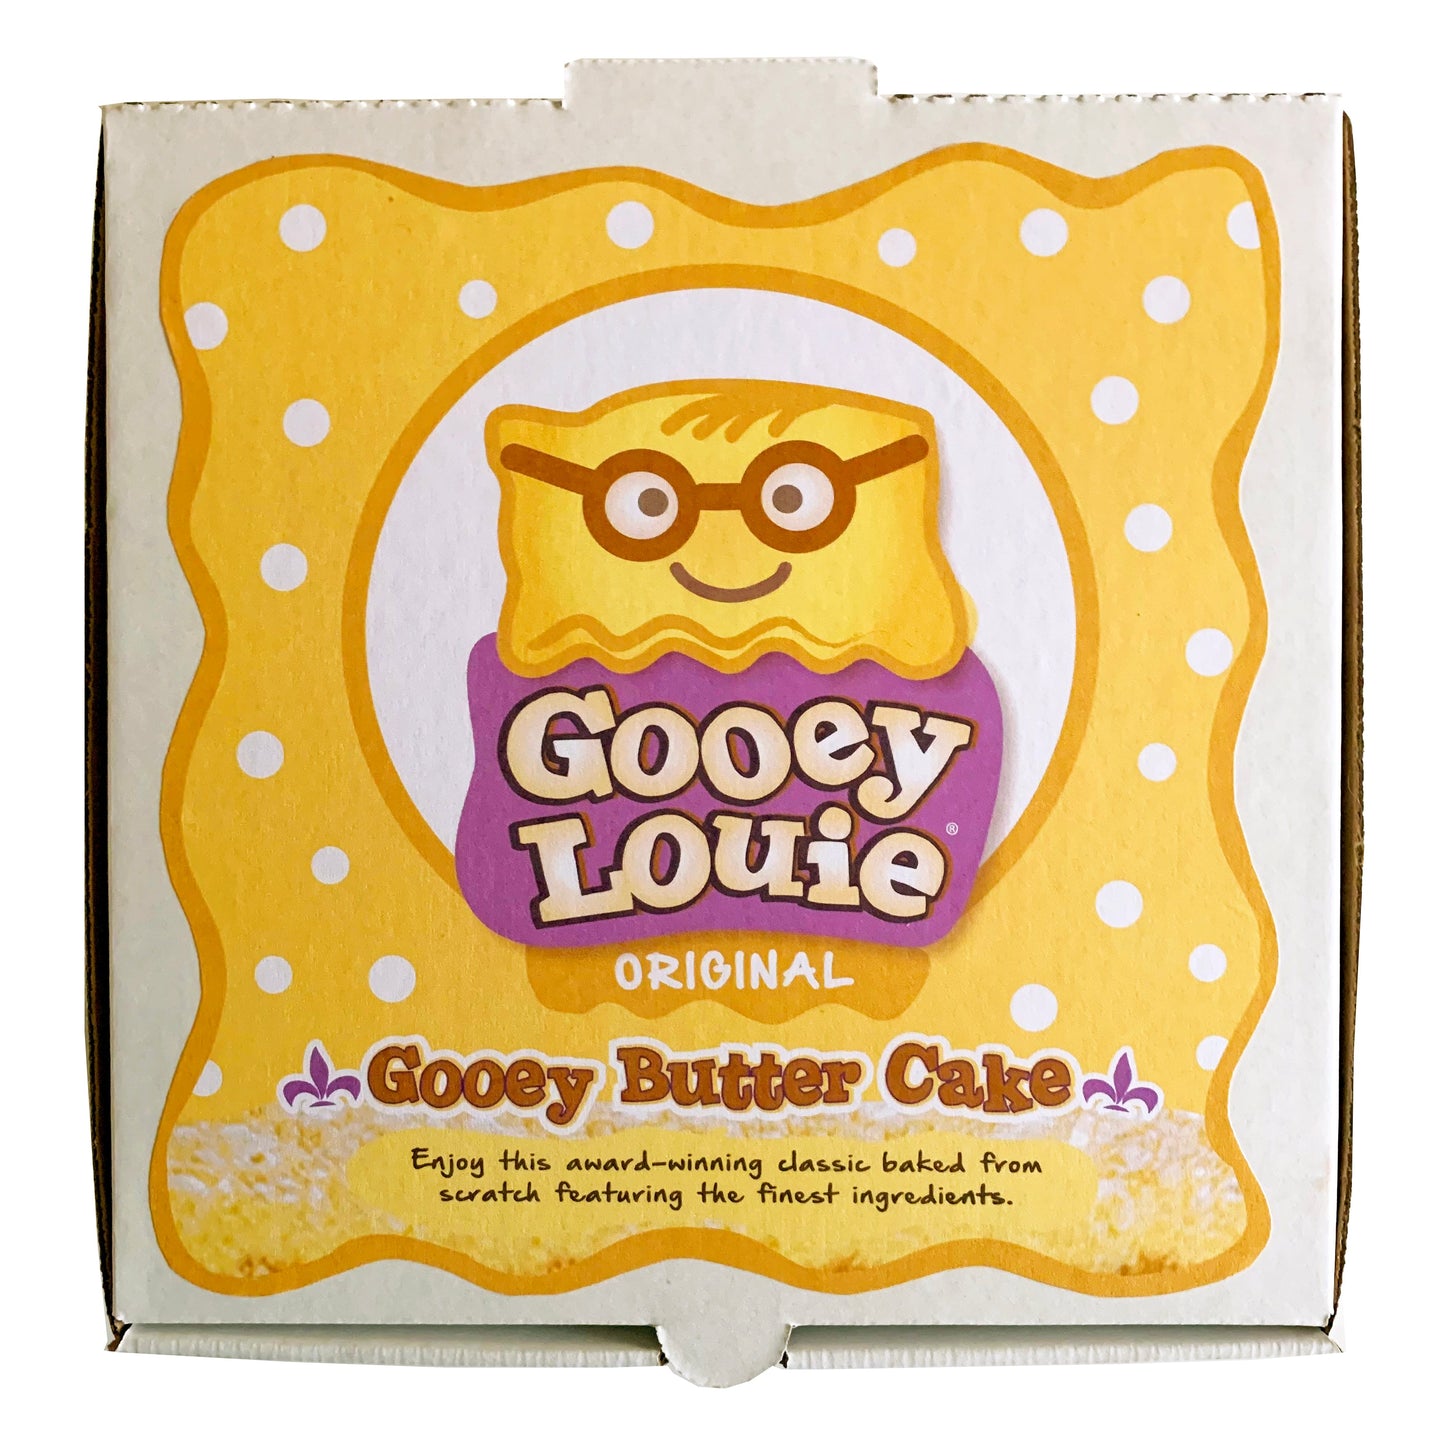 ORIGINAL Gooey Louie Gooey Butter Cake LOCAL PICKUP